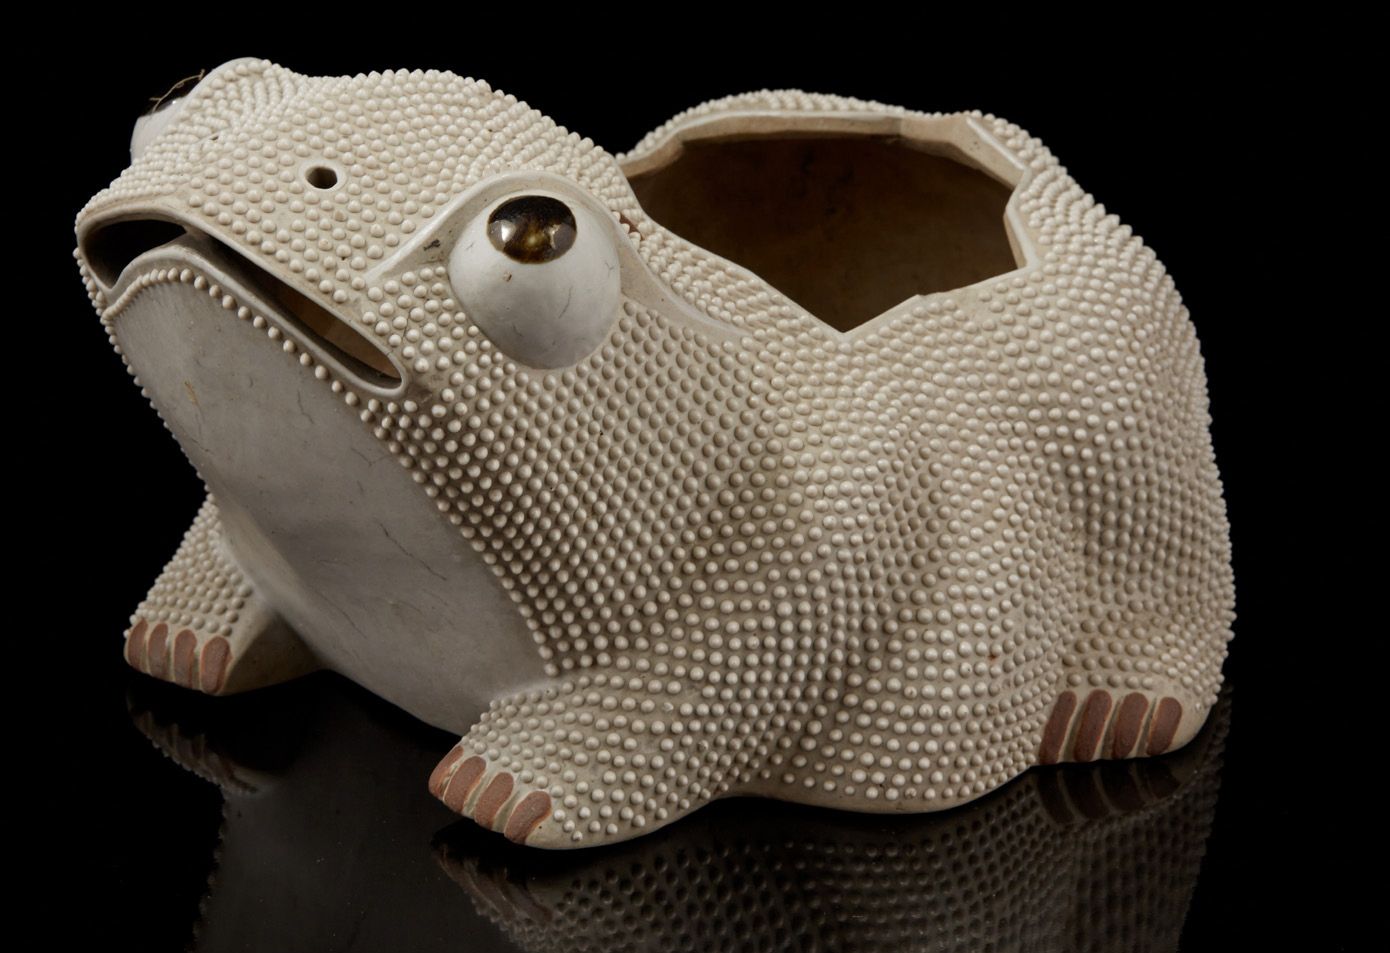 CHINE, XIXe siècle 一个米色的珐琅彩饼干花盆，形状是一只蟾蜍，眼睛睁得大大的，嘴巴张开。
轻微损坏和烧制缺陷。
尺寸：15 x 26厘米。